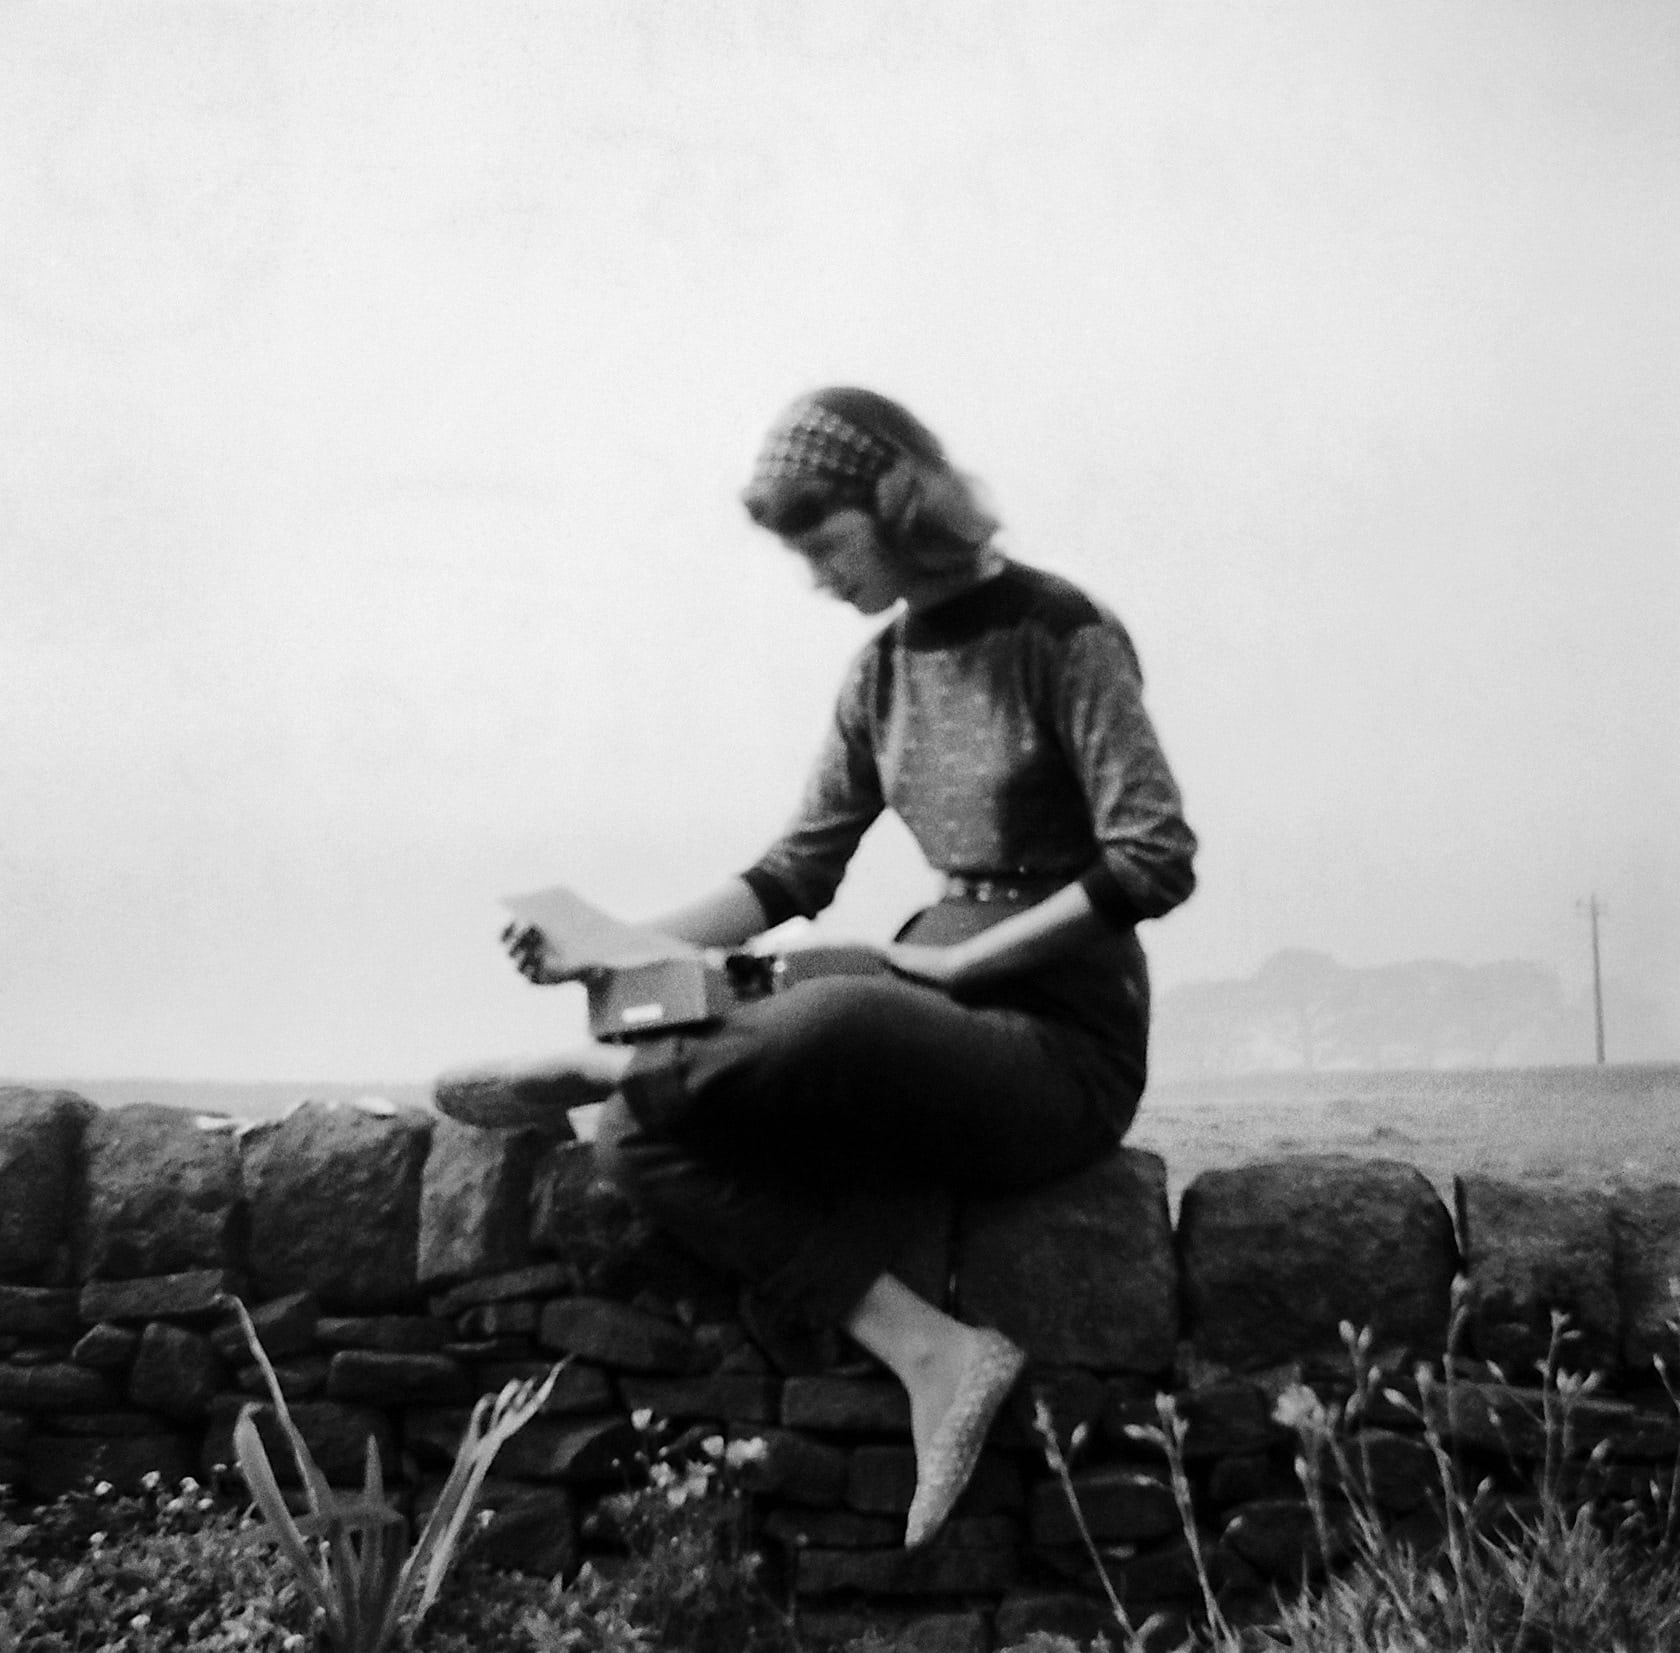 Sylvia Plath with typewriter in Yorkshire, September 1956 Photograph: Elinor Friedman Klein/Mortimer Rare Book Room, Smith College, Northampton, Massachusetts